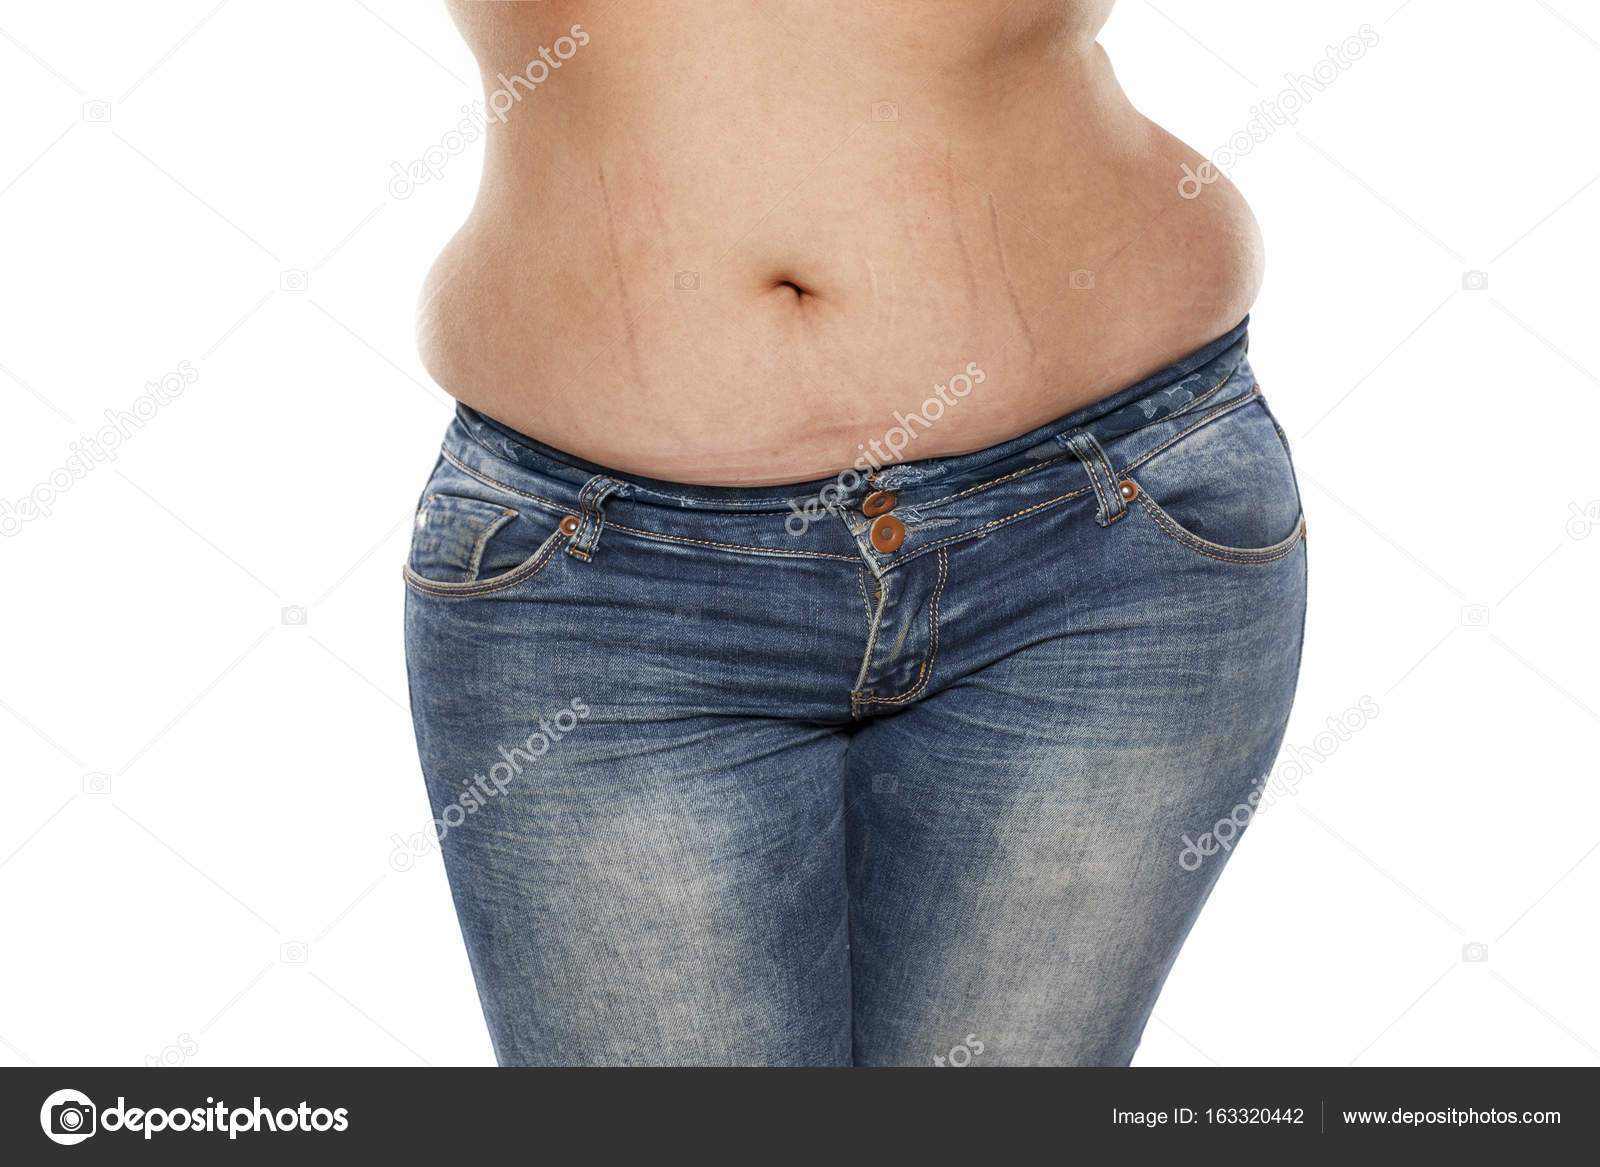 https://st3.depositphotos.com/1912333/16332/i/1600/depositphotos_163320442-stock-photo-obese-woman-in-jeans.jpg